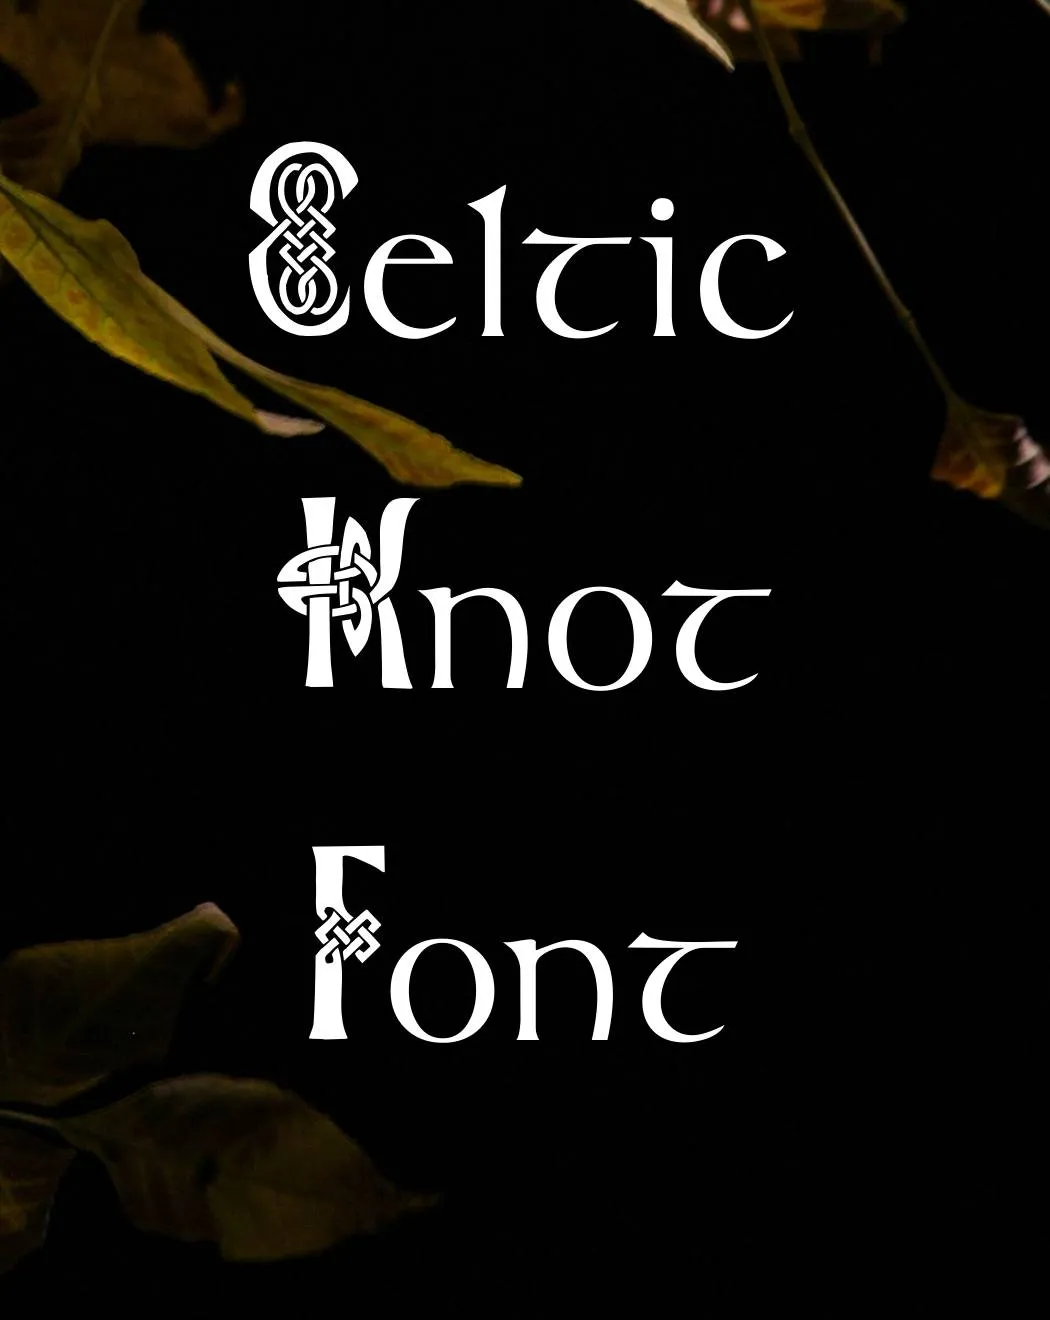 Celtic Knot Font Free Download